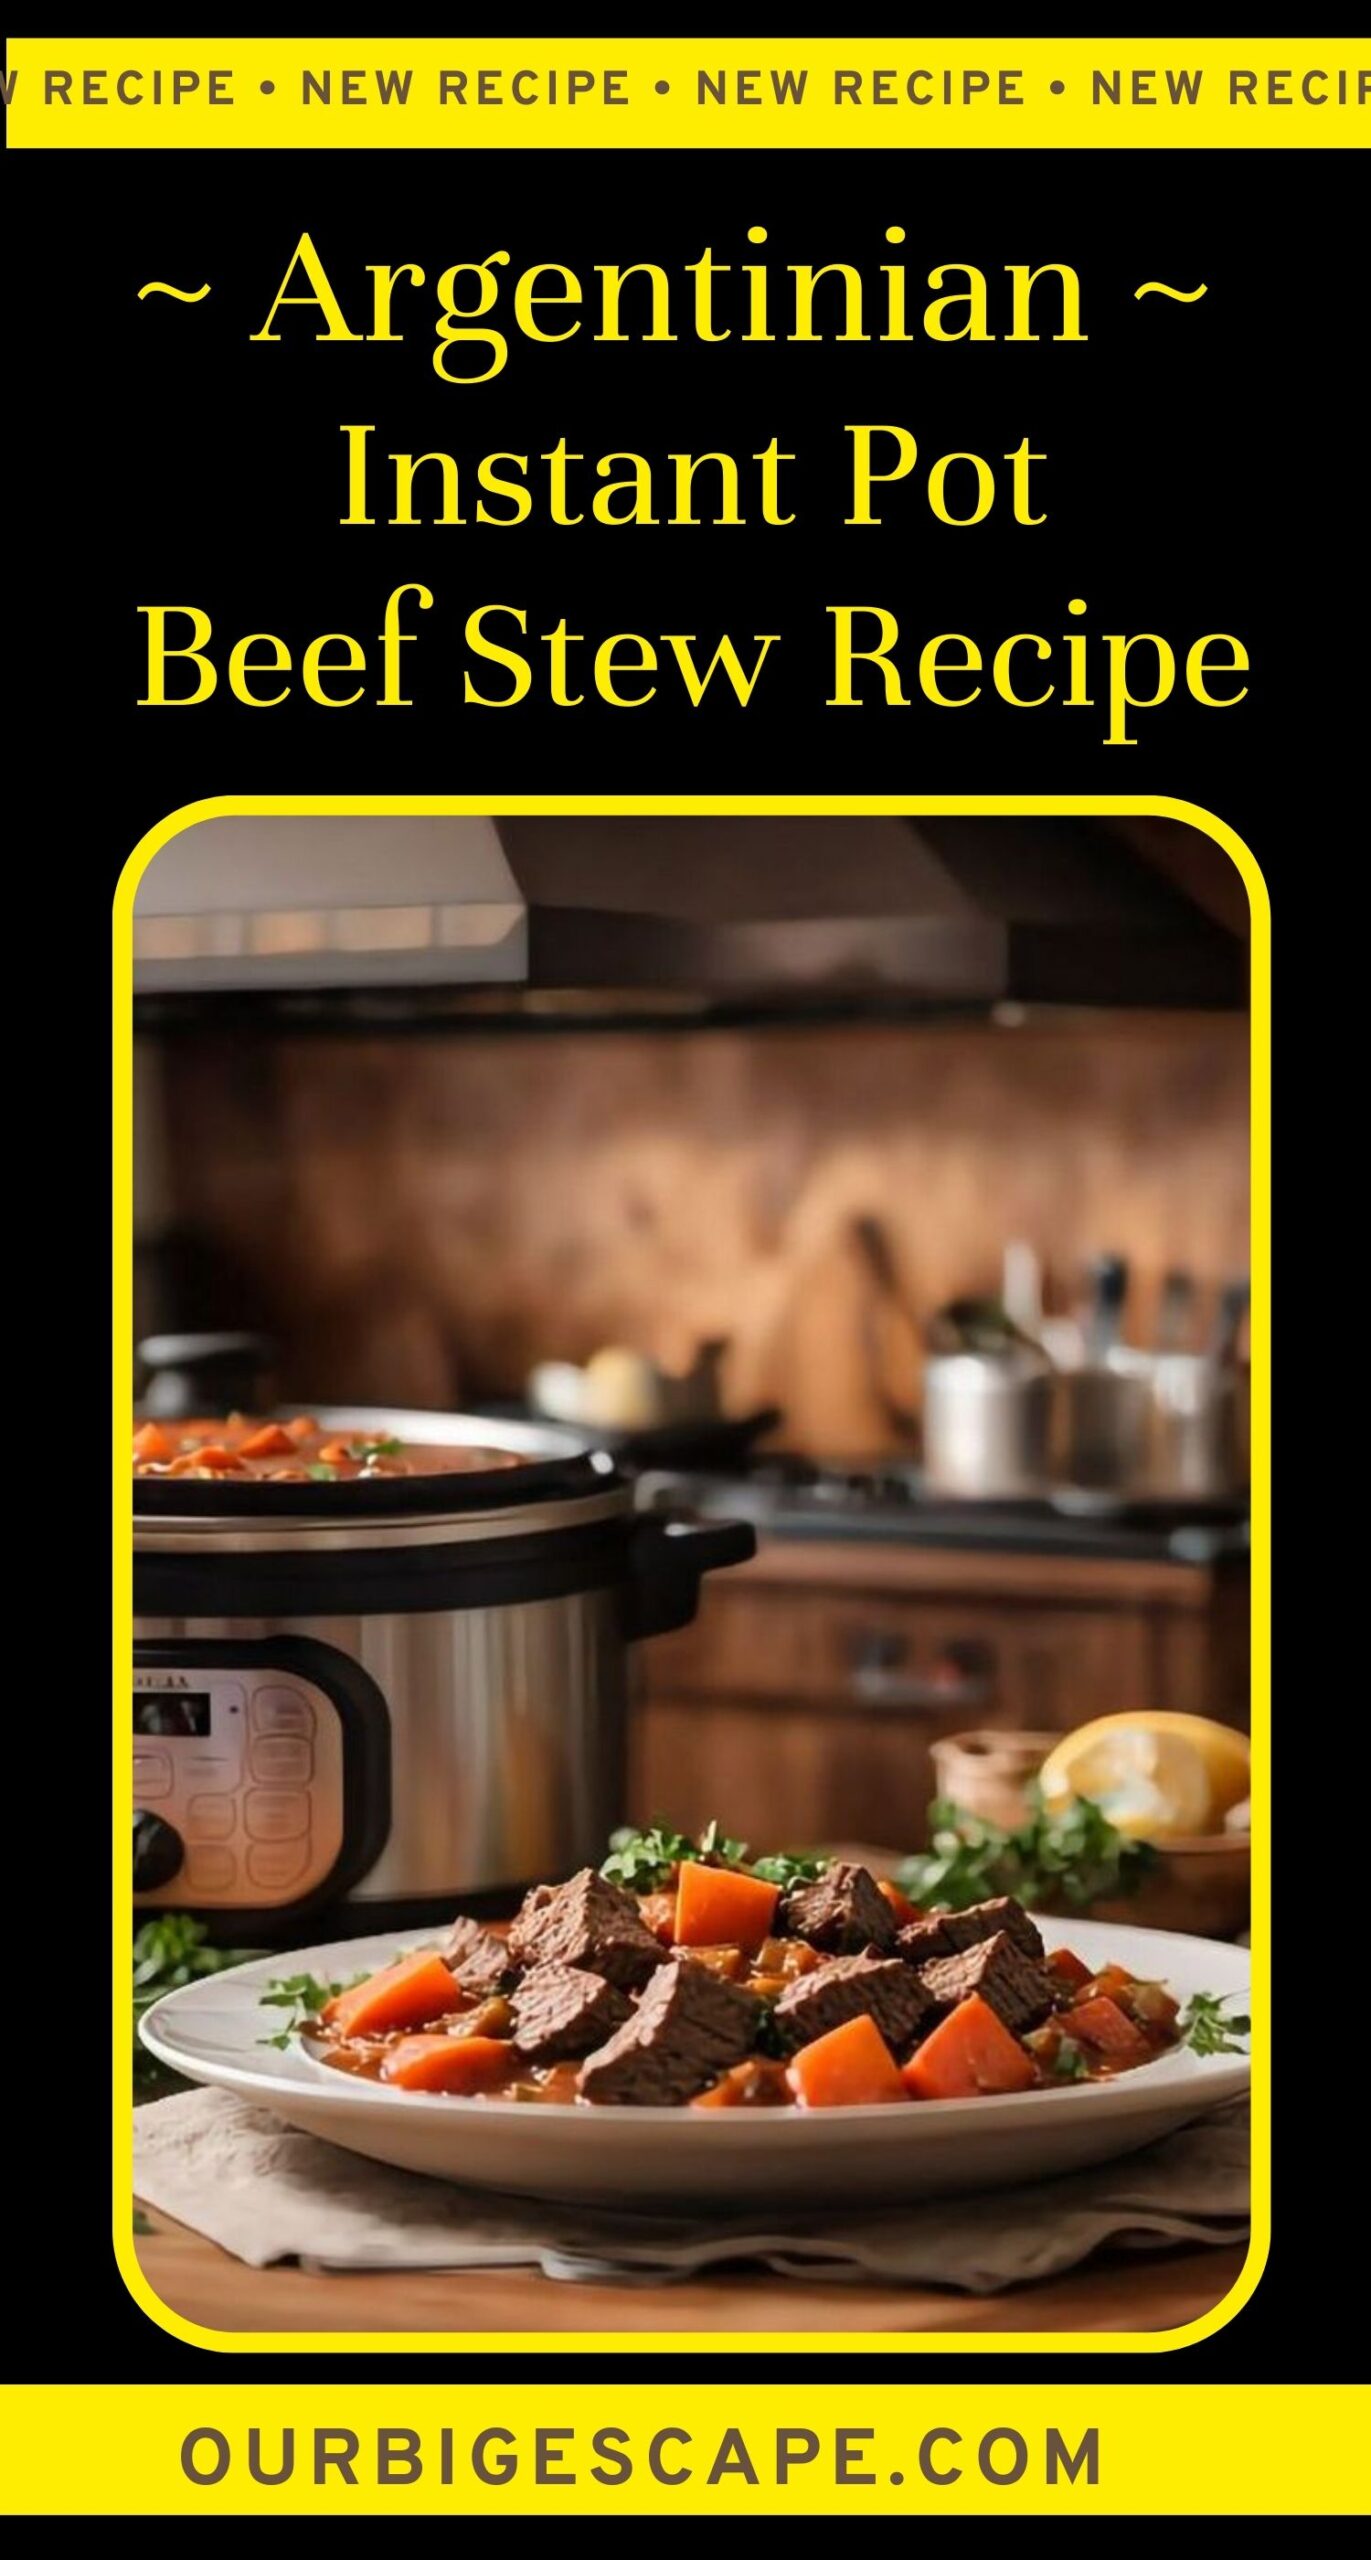 23. Argentinian Instant Pot Beef Stew Recipe (1)